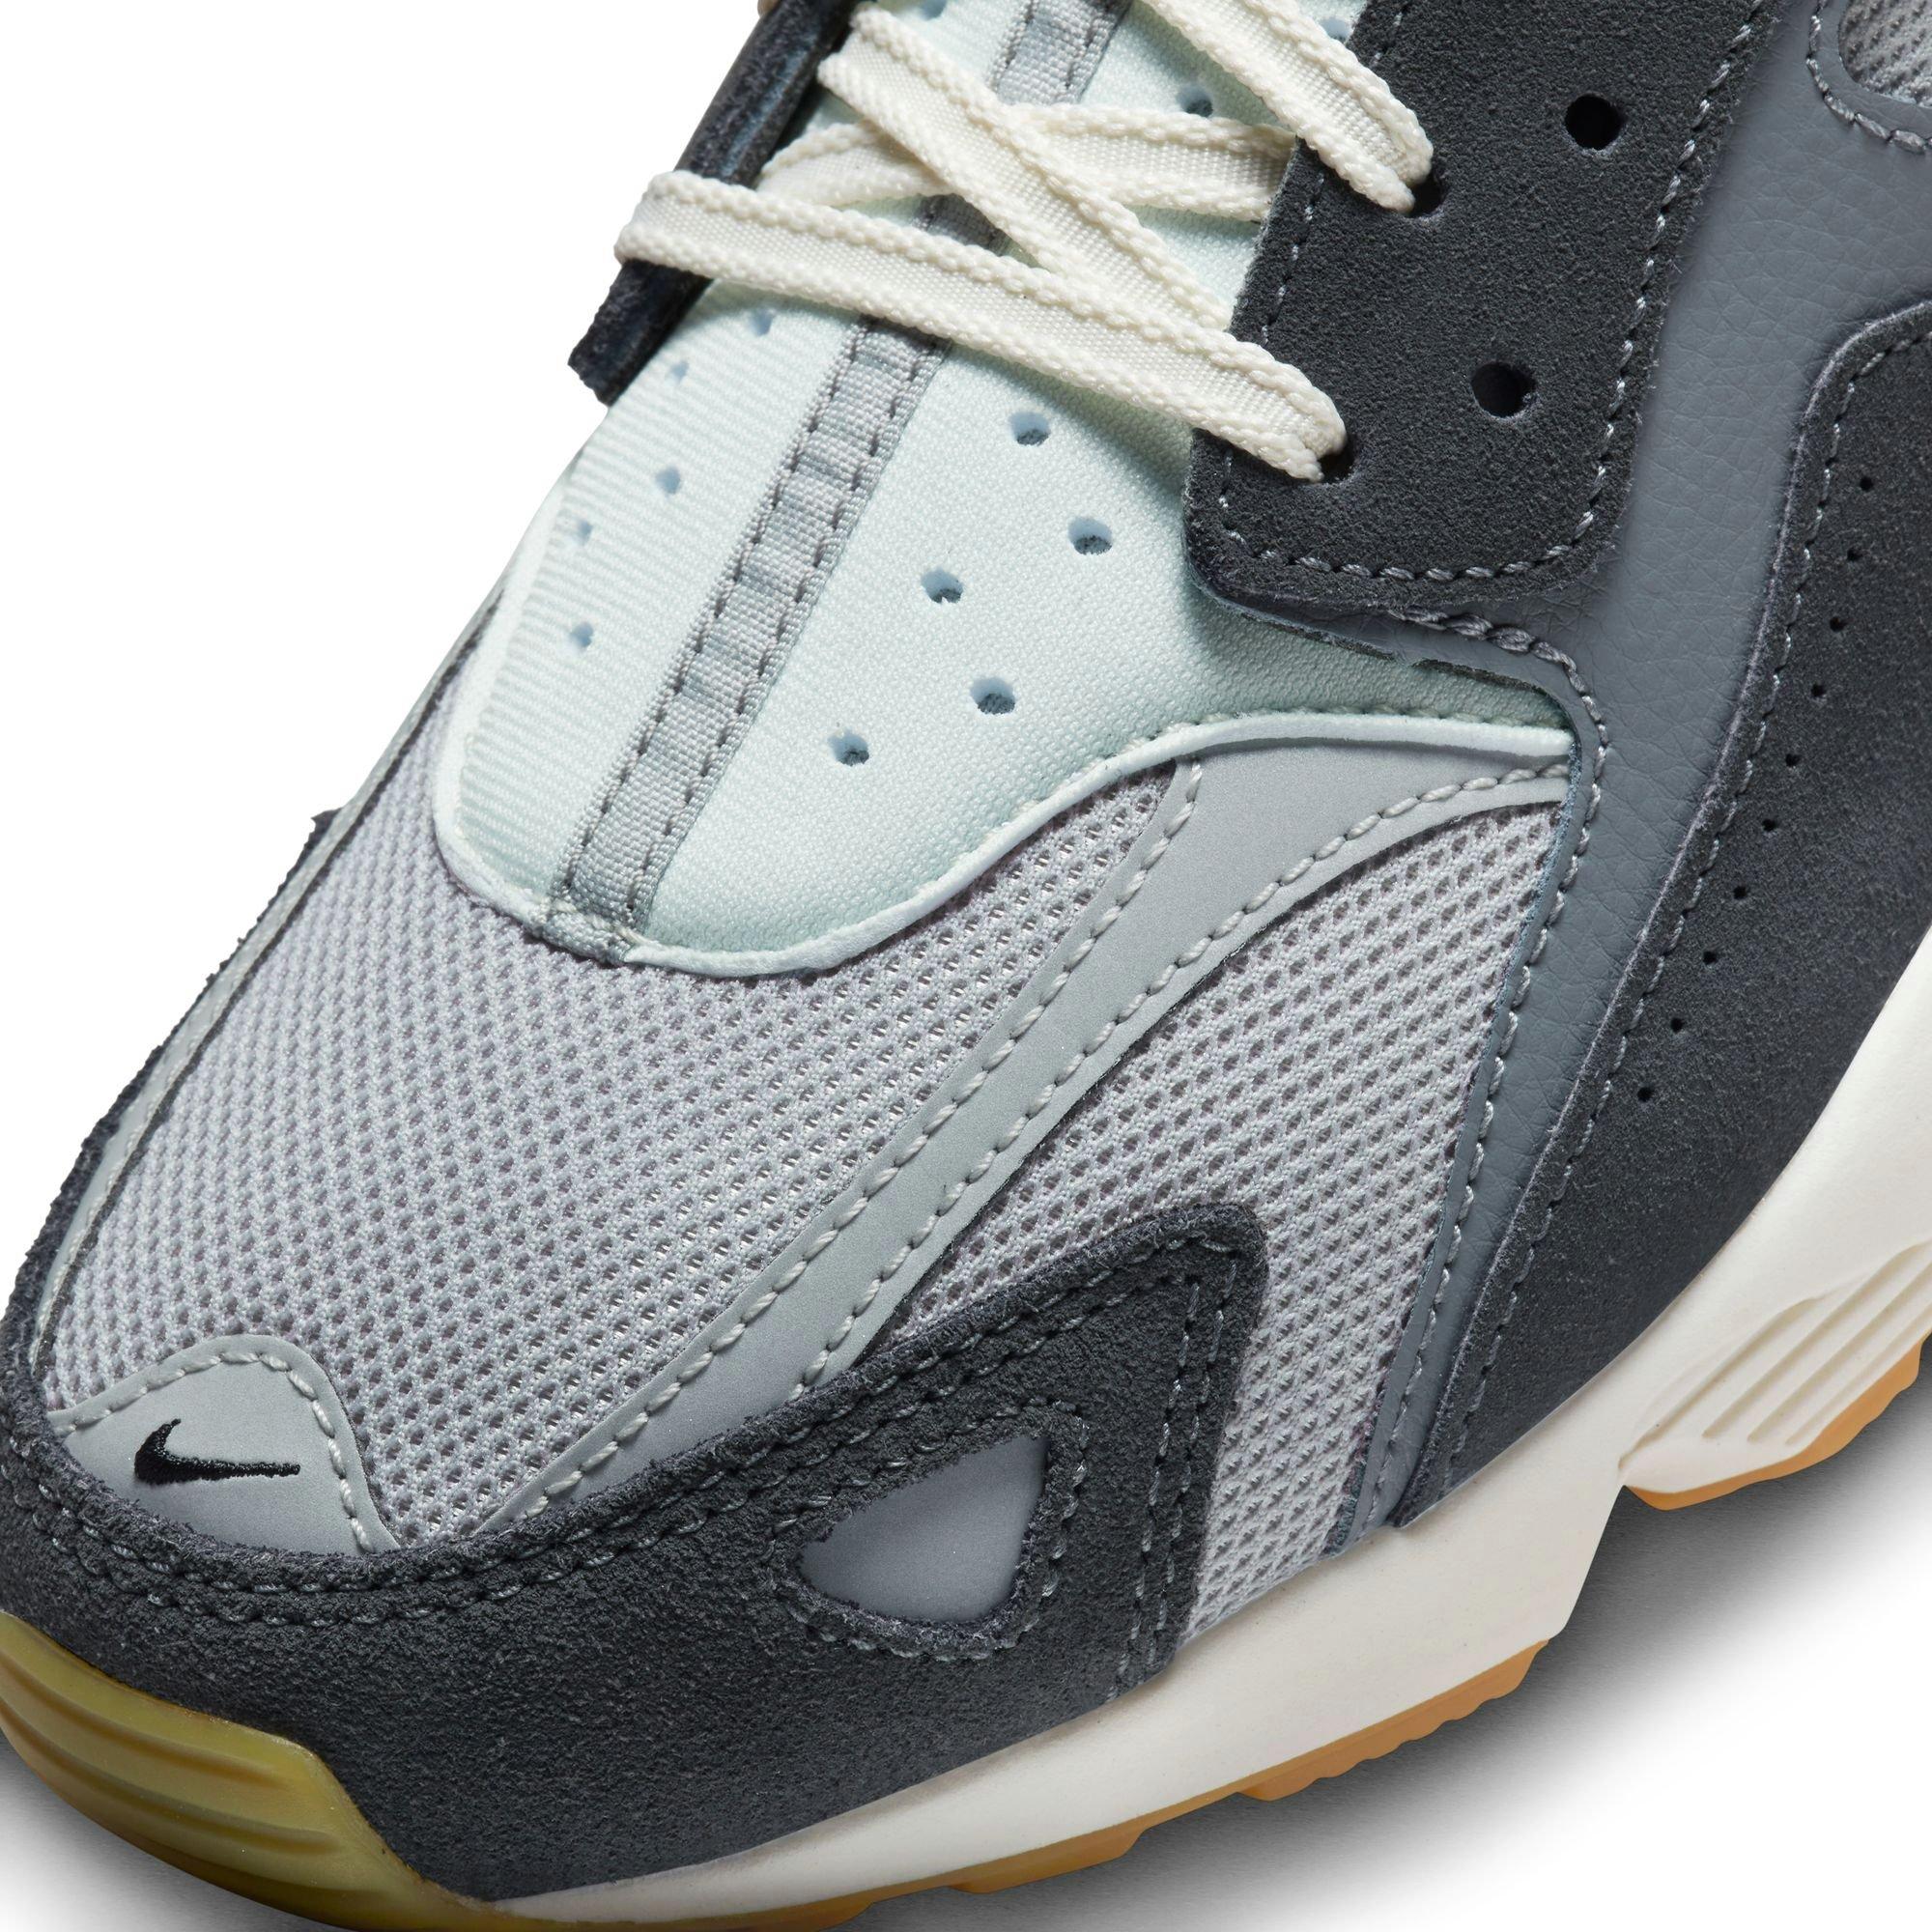 Nike Air Huarache - Grey - Mens - Trainers - Size: 12